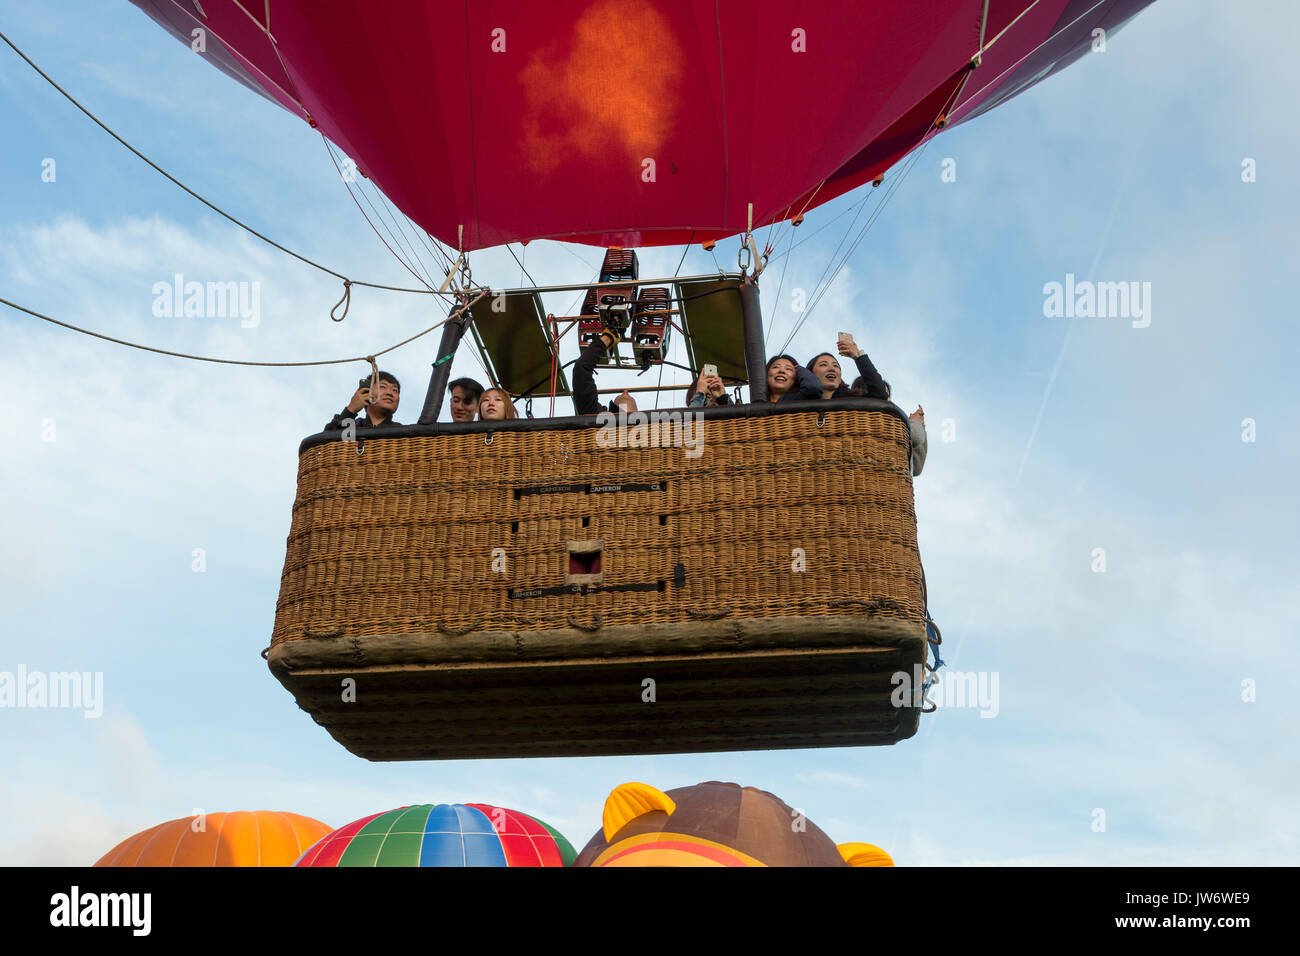 Bristol, UK. 11th Aug, 2017. Bristol International Balloon Fiesta in Ashton Court, Bristol, UK Credit: Neil Cordell/Alamy Live News Stock Photo